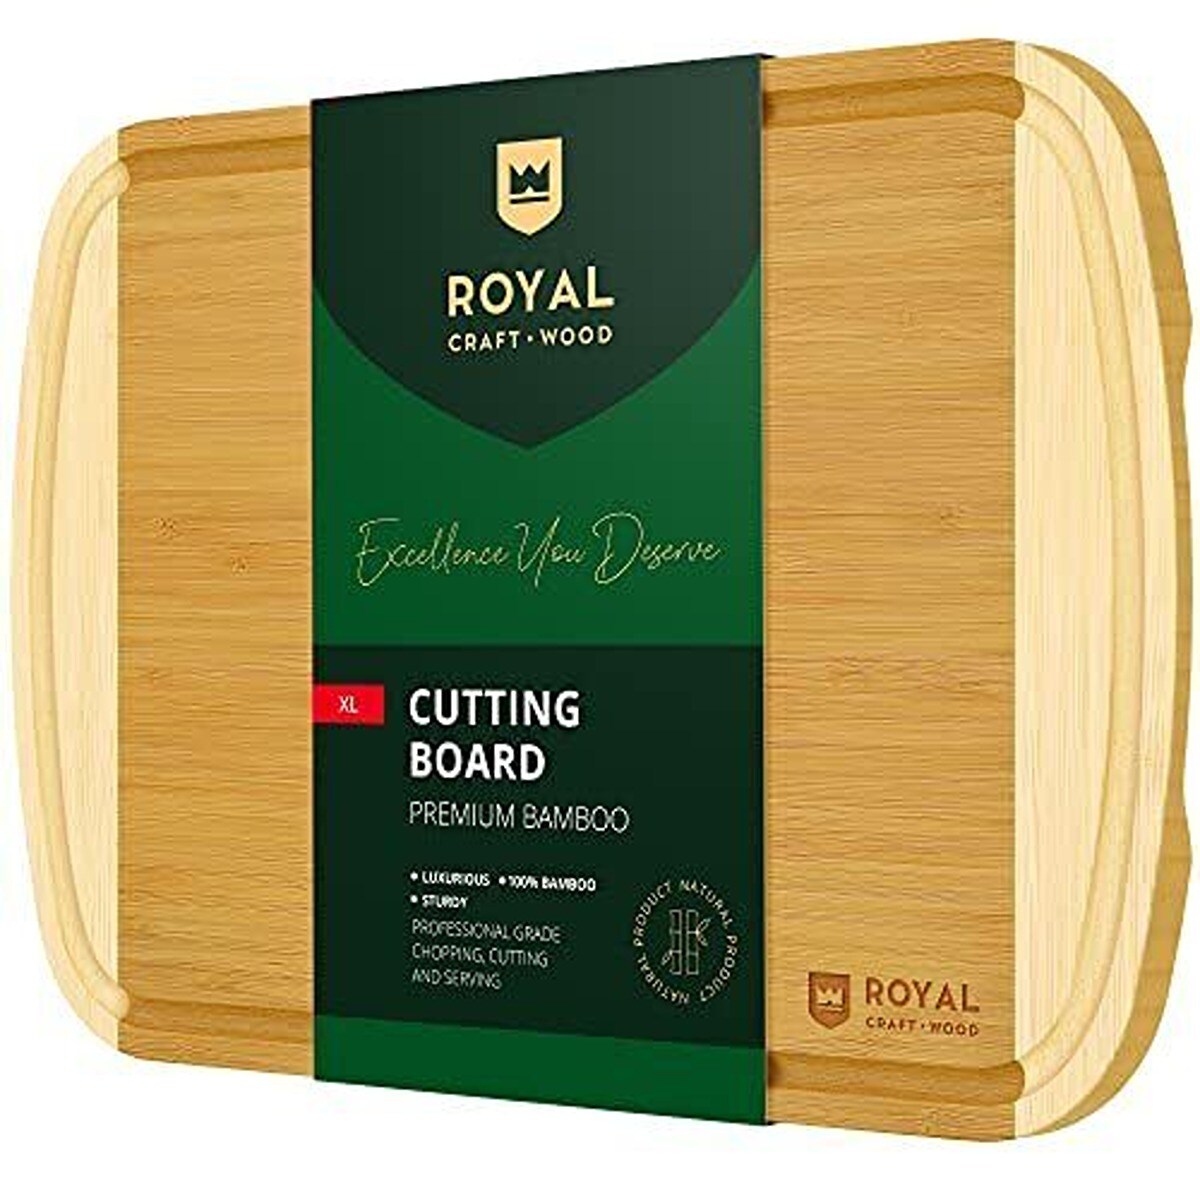 ROYAL CRAFT WOOD Durability Bamboo Cutting Boards